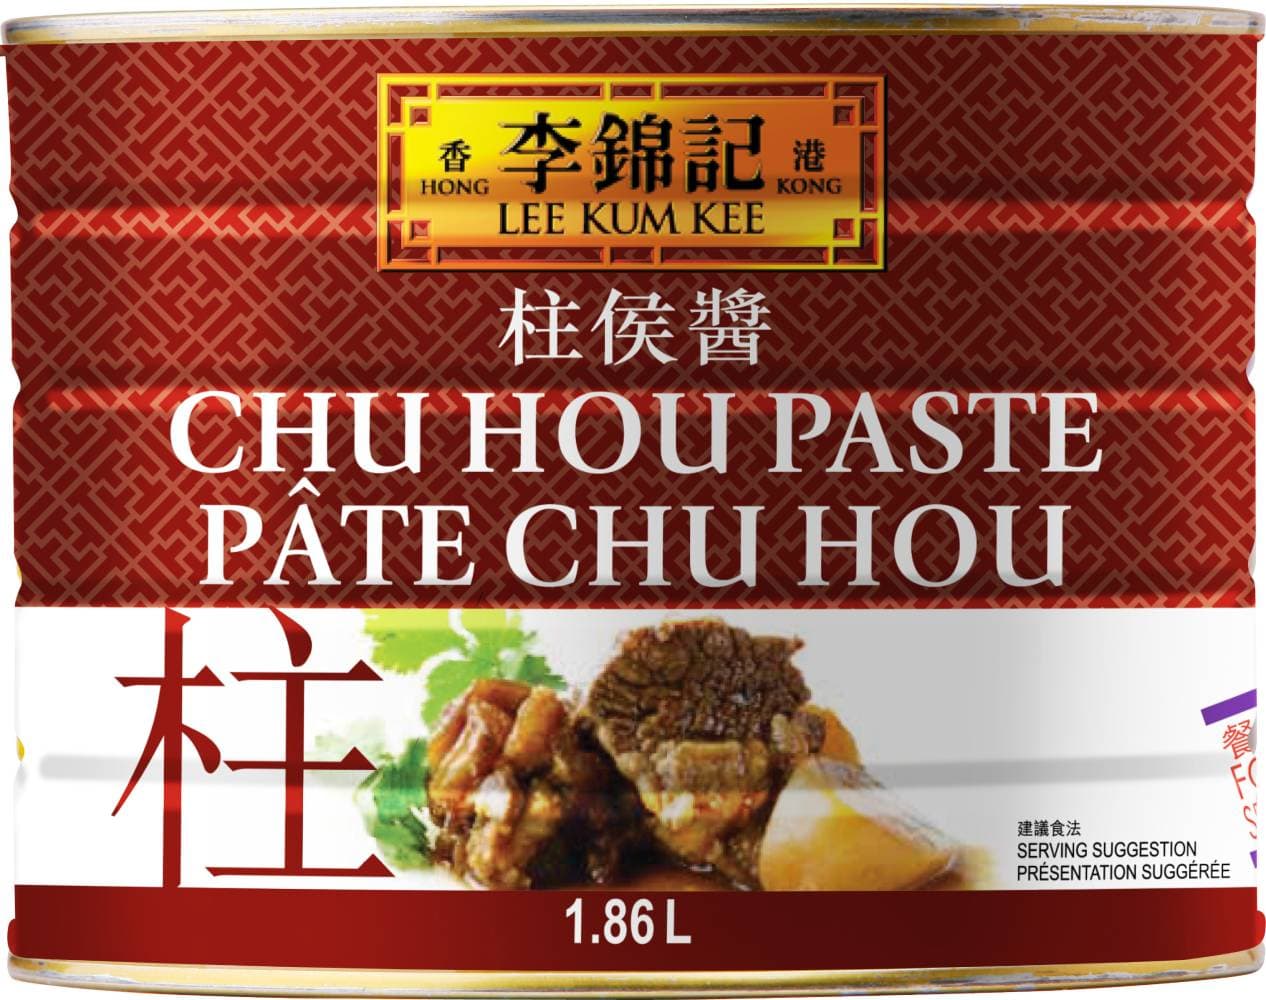 Lee kum kee panda sauce aux huîtres, 9 oz